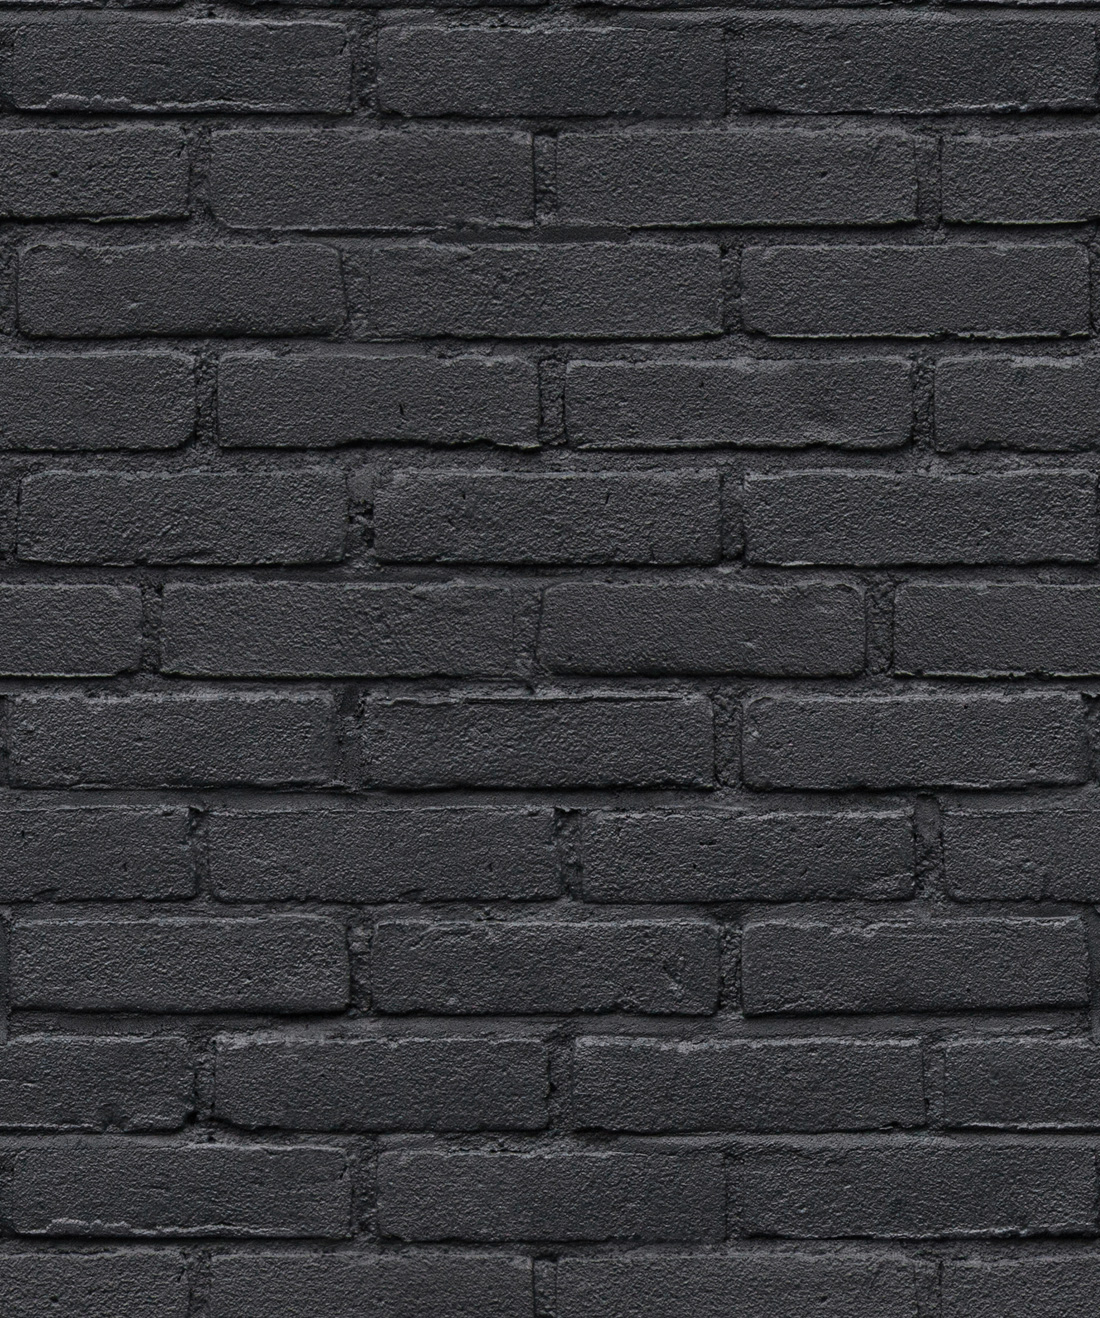 Amsterdam Bricks Wallpaper Best Black Brick Milton King